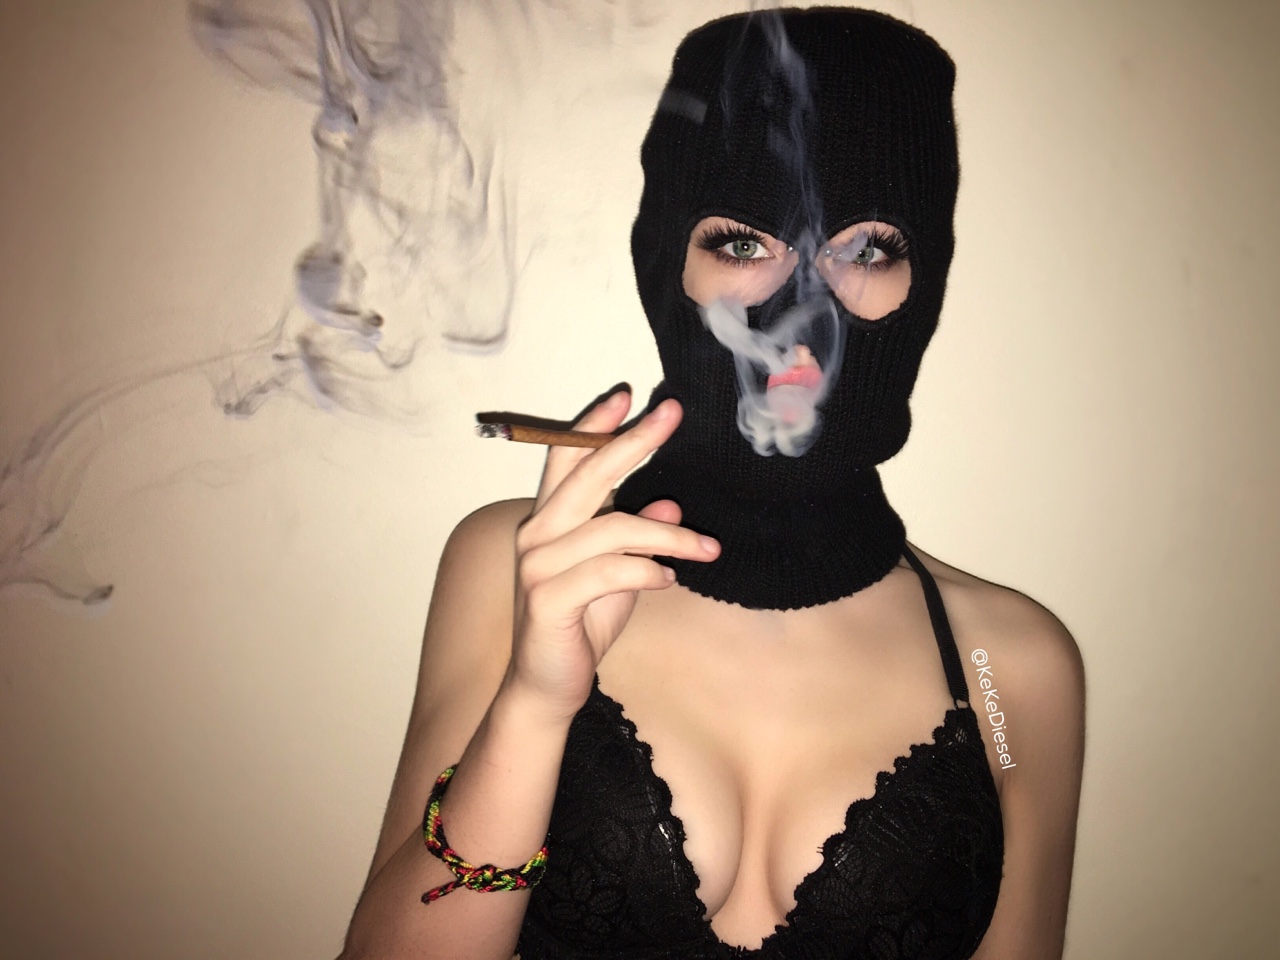 Teen masturbation striptease smoking balaclava helmet